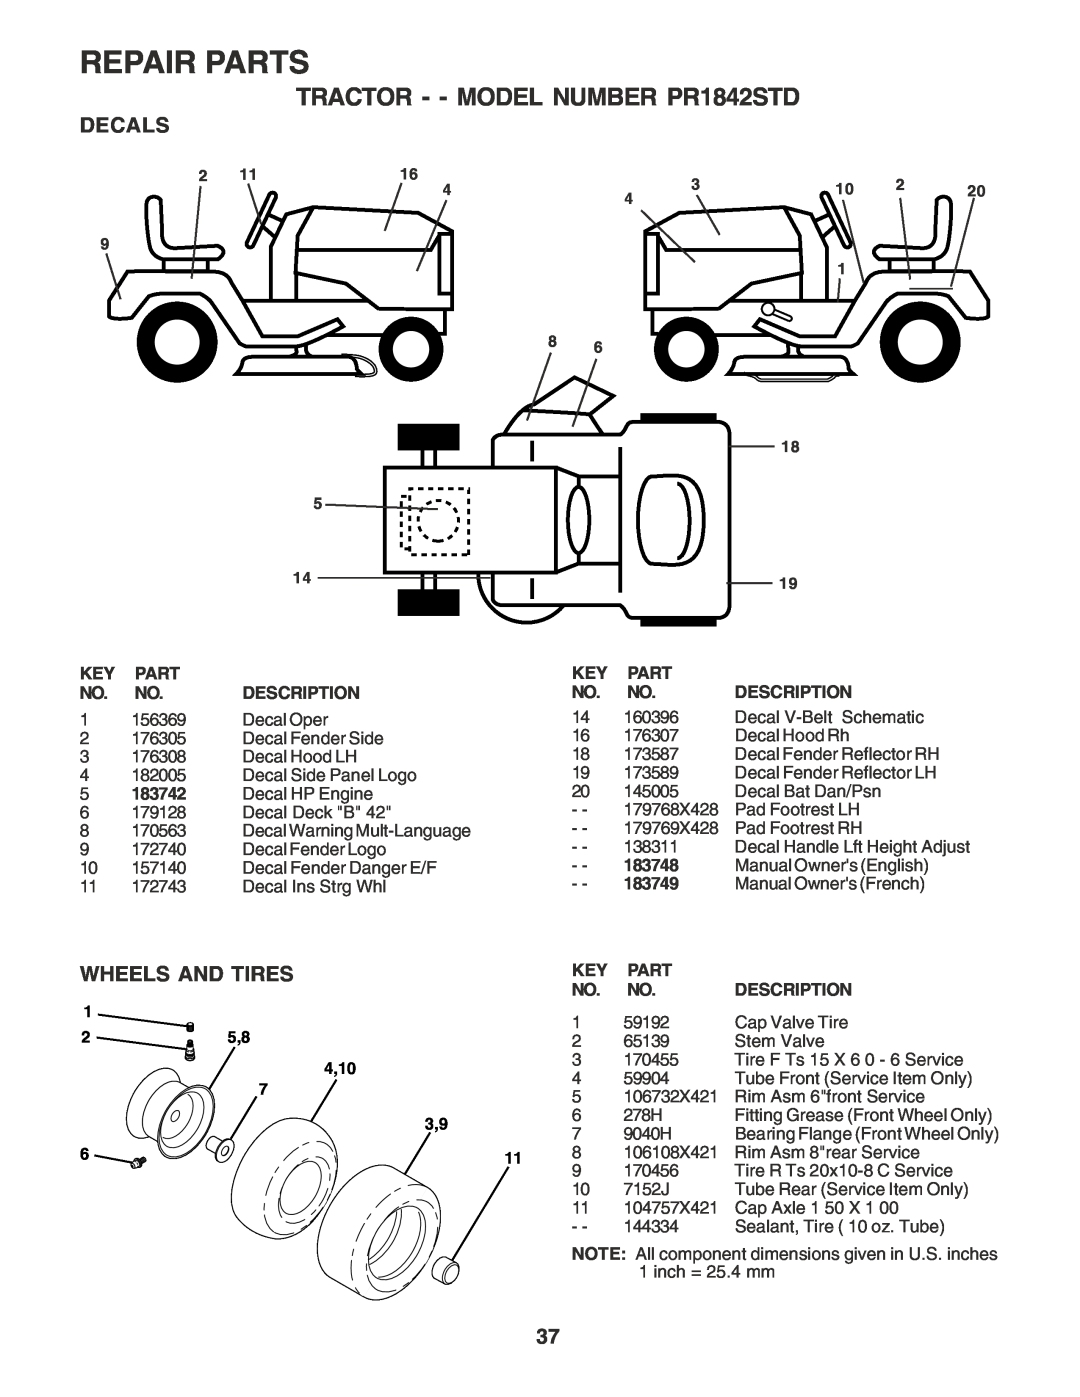 Poulan Decals, Wheels And Tires, Repair Parts, TRACTOR - - MODEL NUMBER PR1842STD, Description, 183742, 183748, 183749 